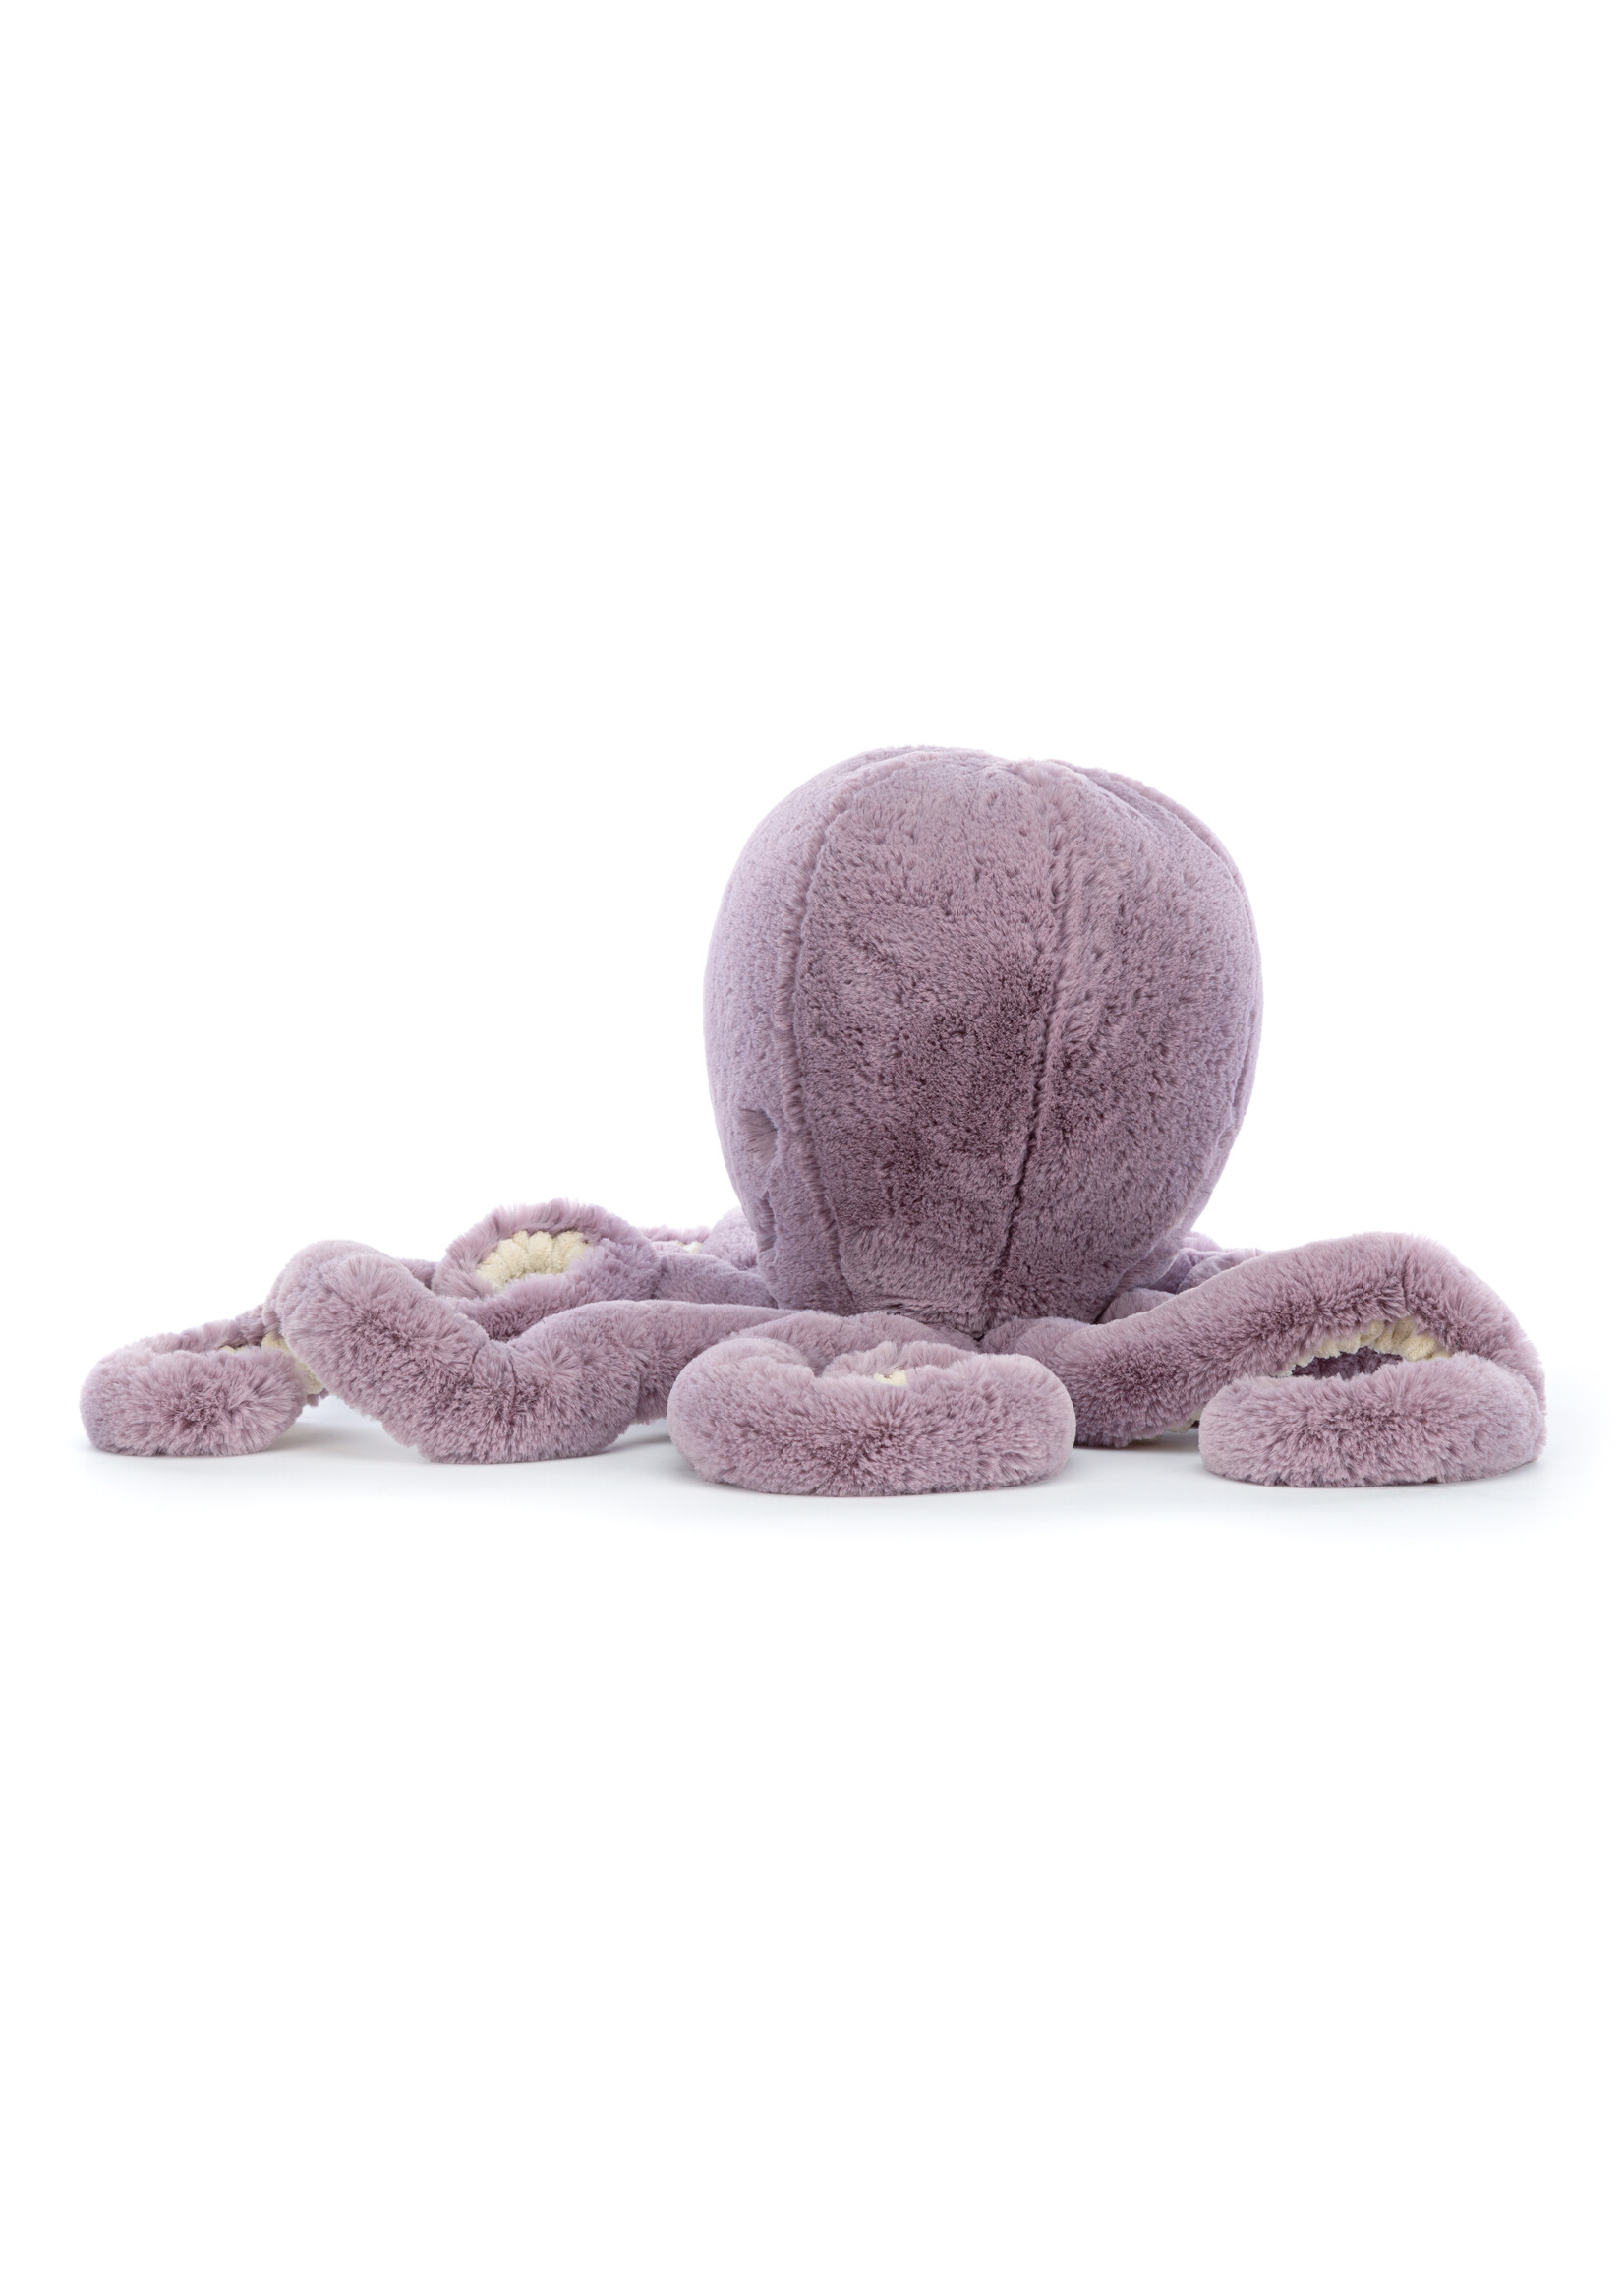 Jellycat Maya Octopus - Large